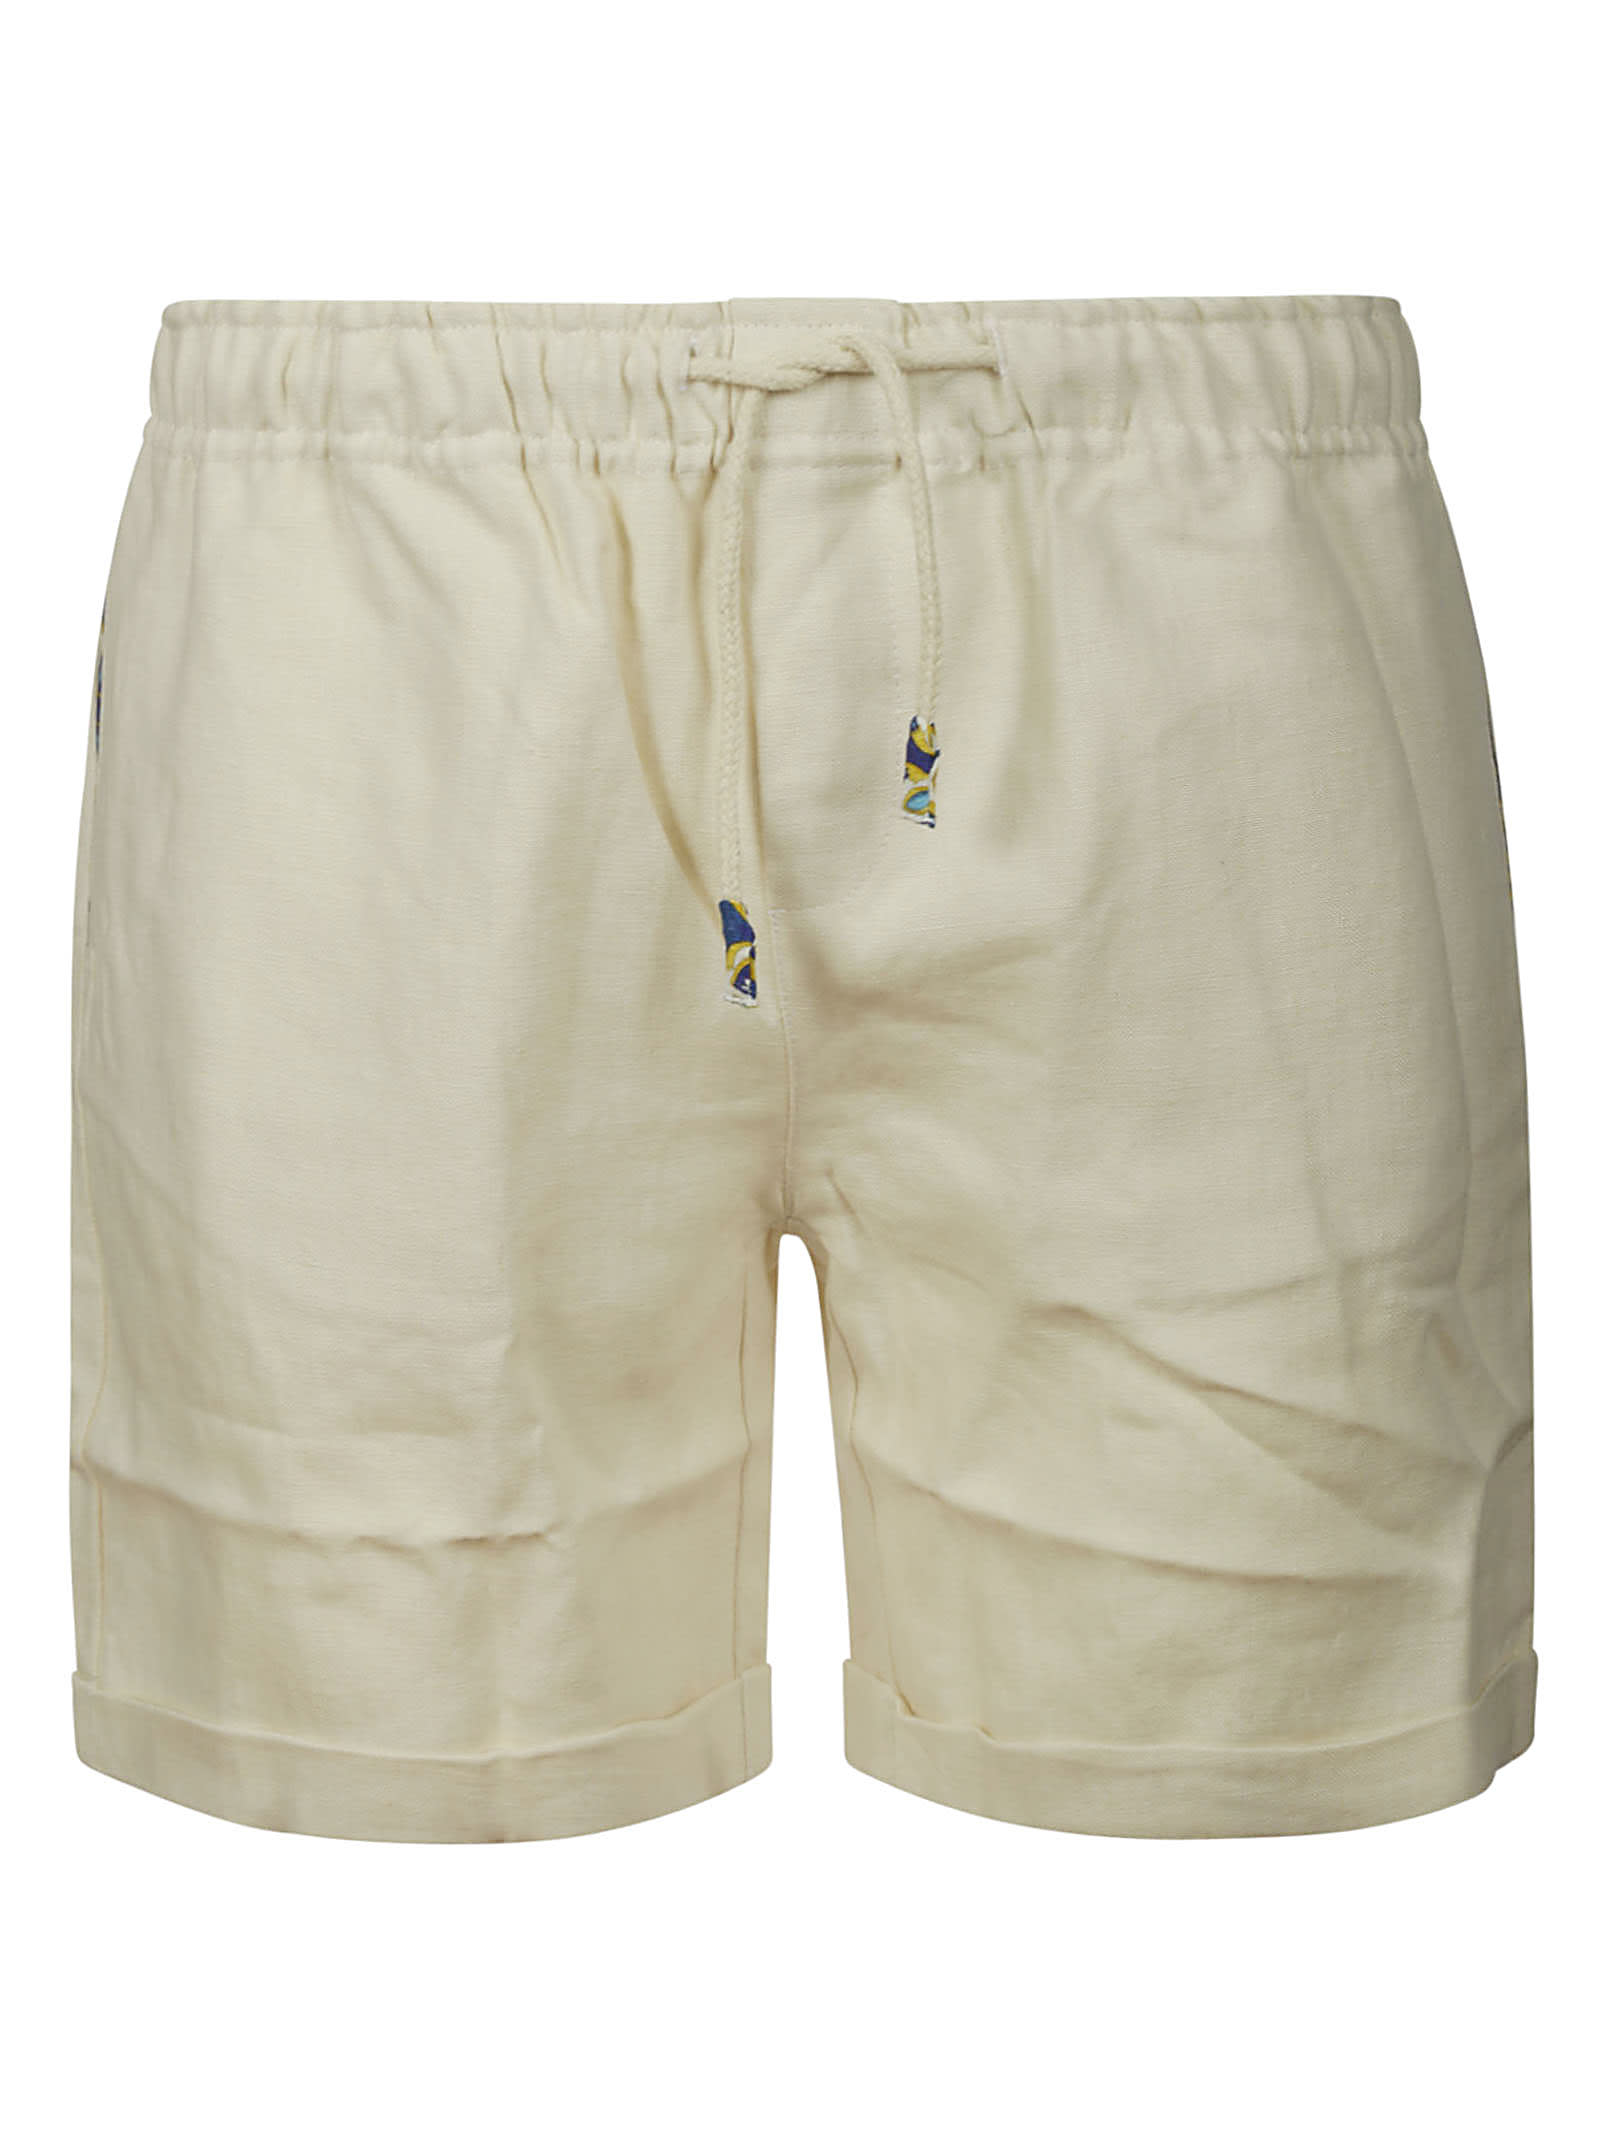 Peninsula Swimwear Shorts